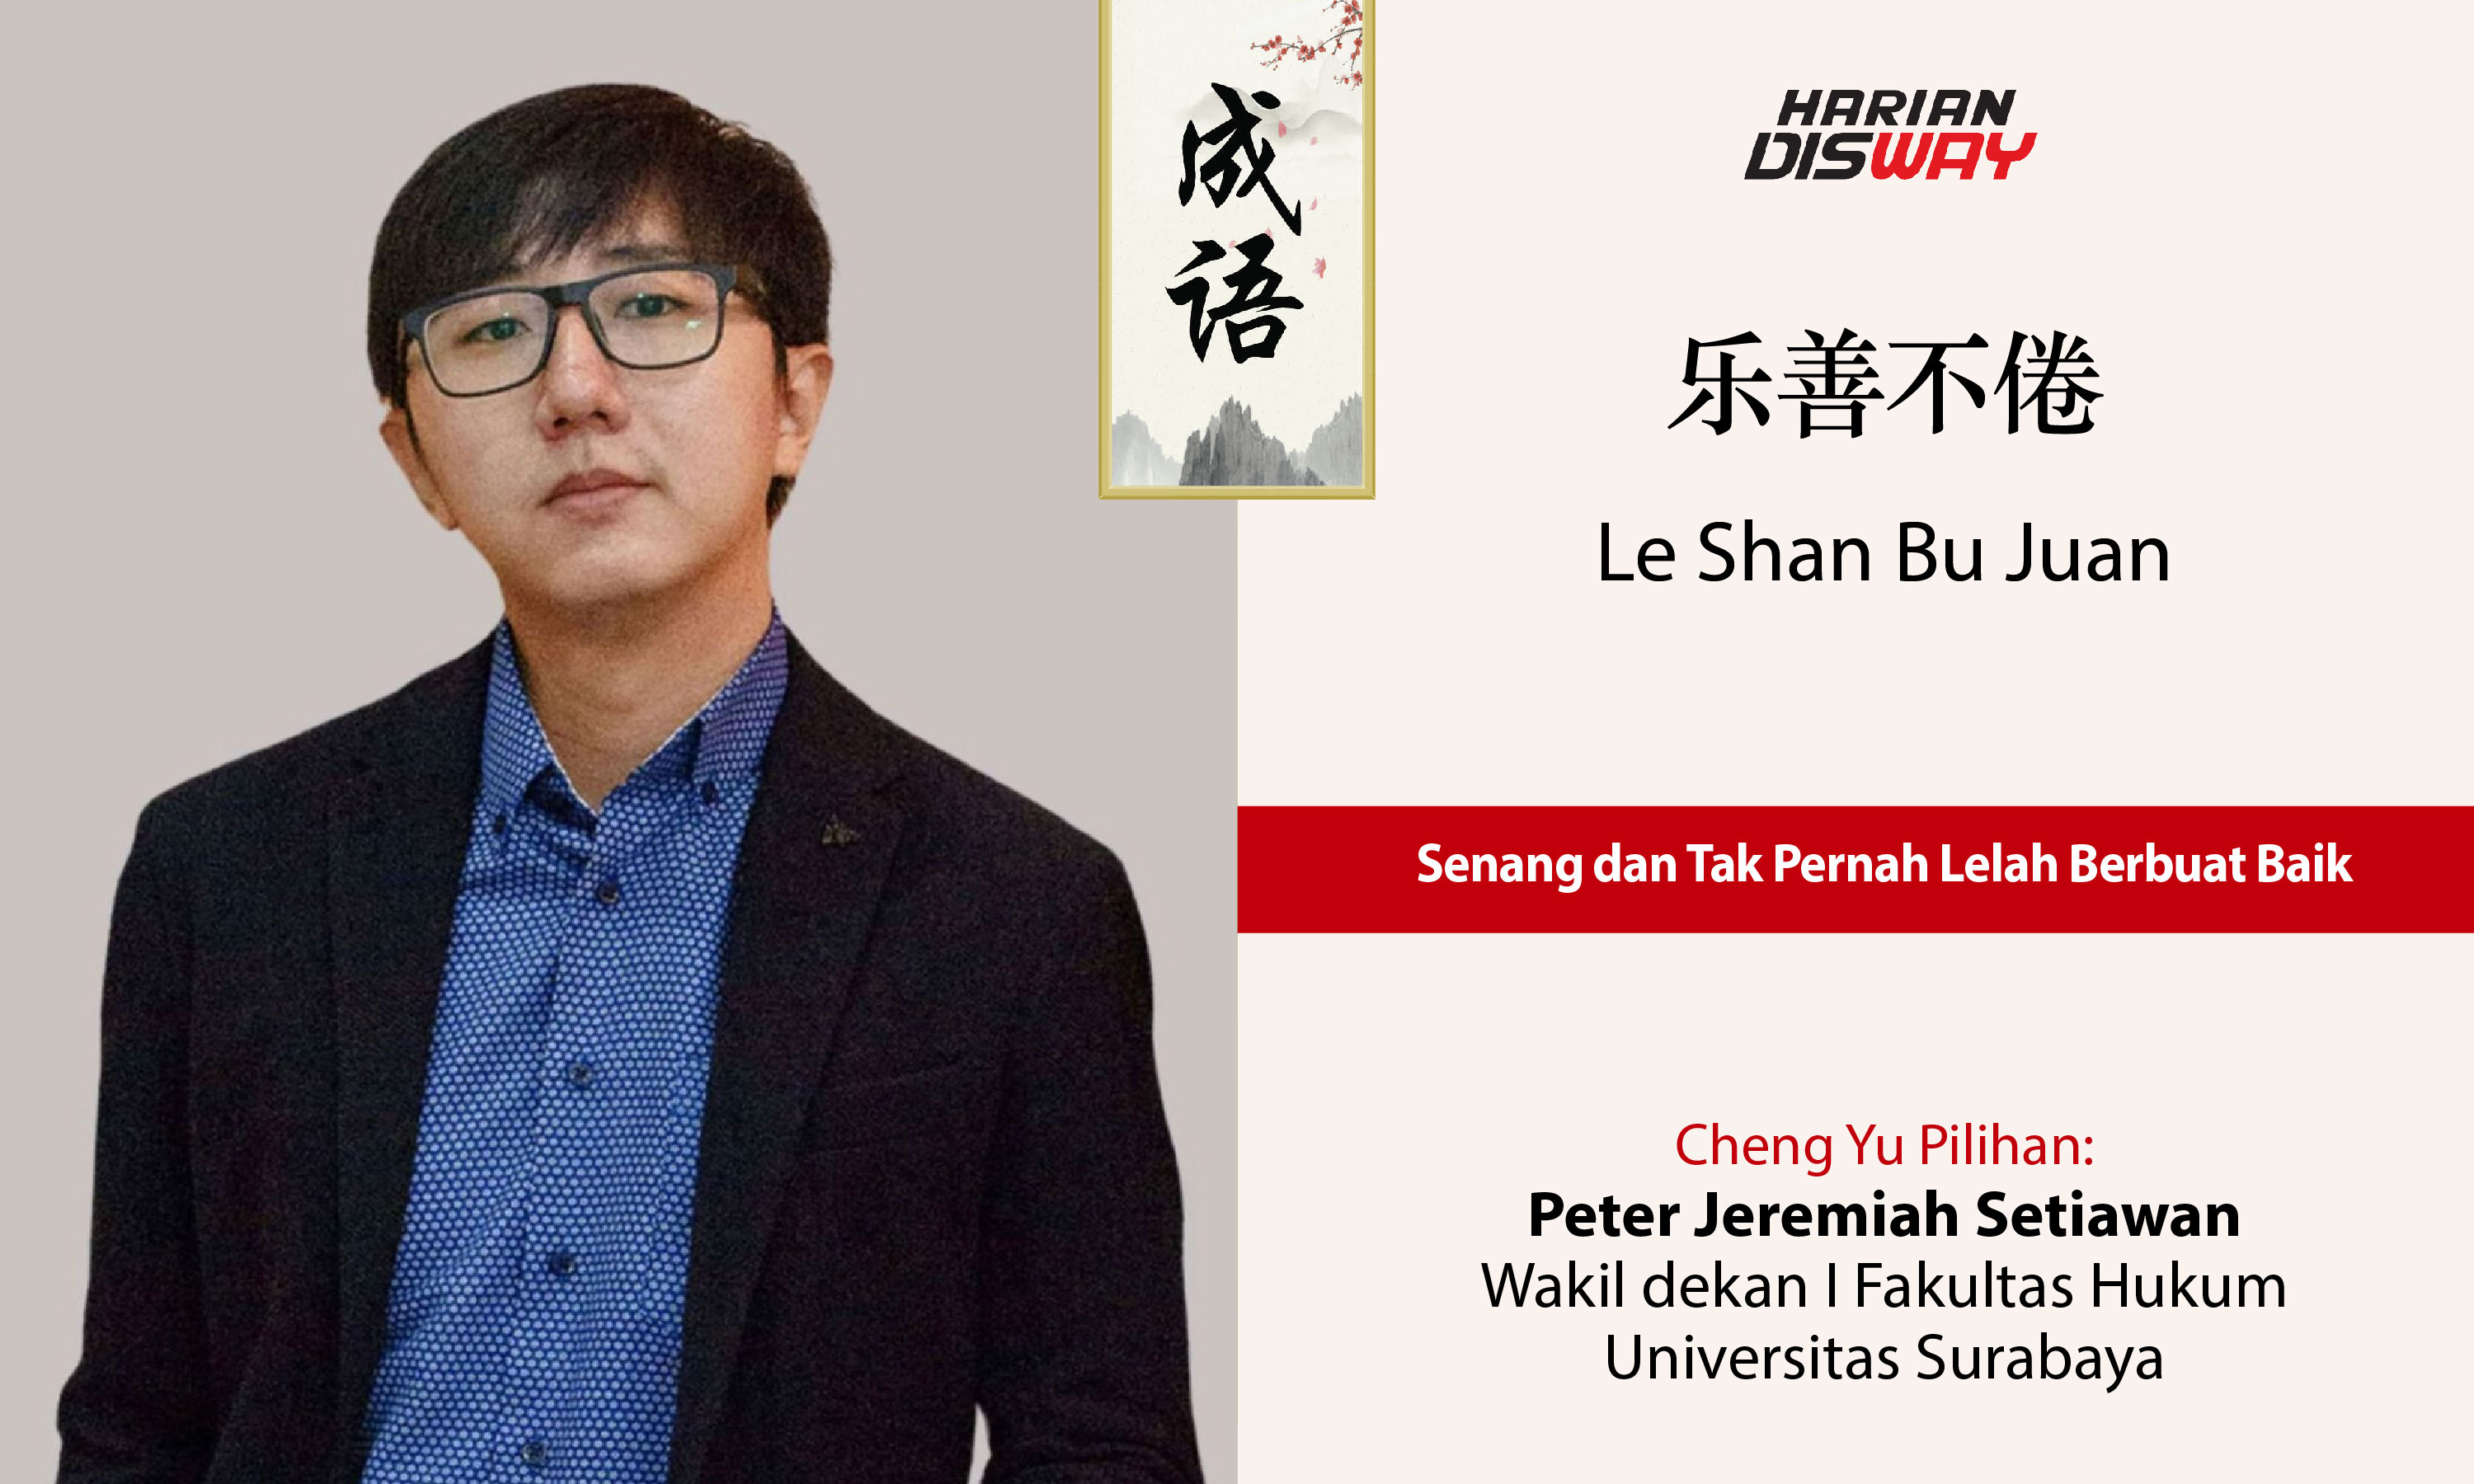 Cheng Yu Pilihan Wakil dekan I Fakultas Hukum Universitas Surabaya Peter Jeremiah Setiawan: Le Shan Bu Juan